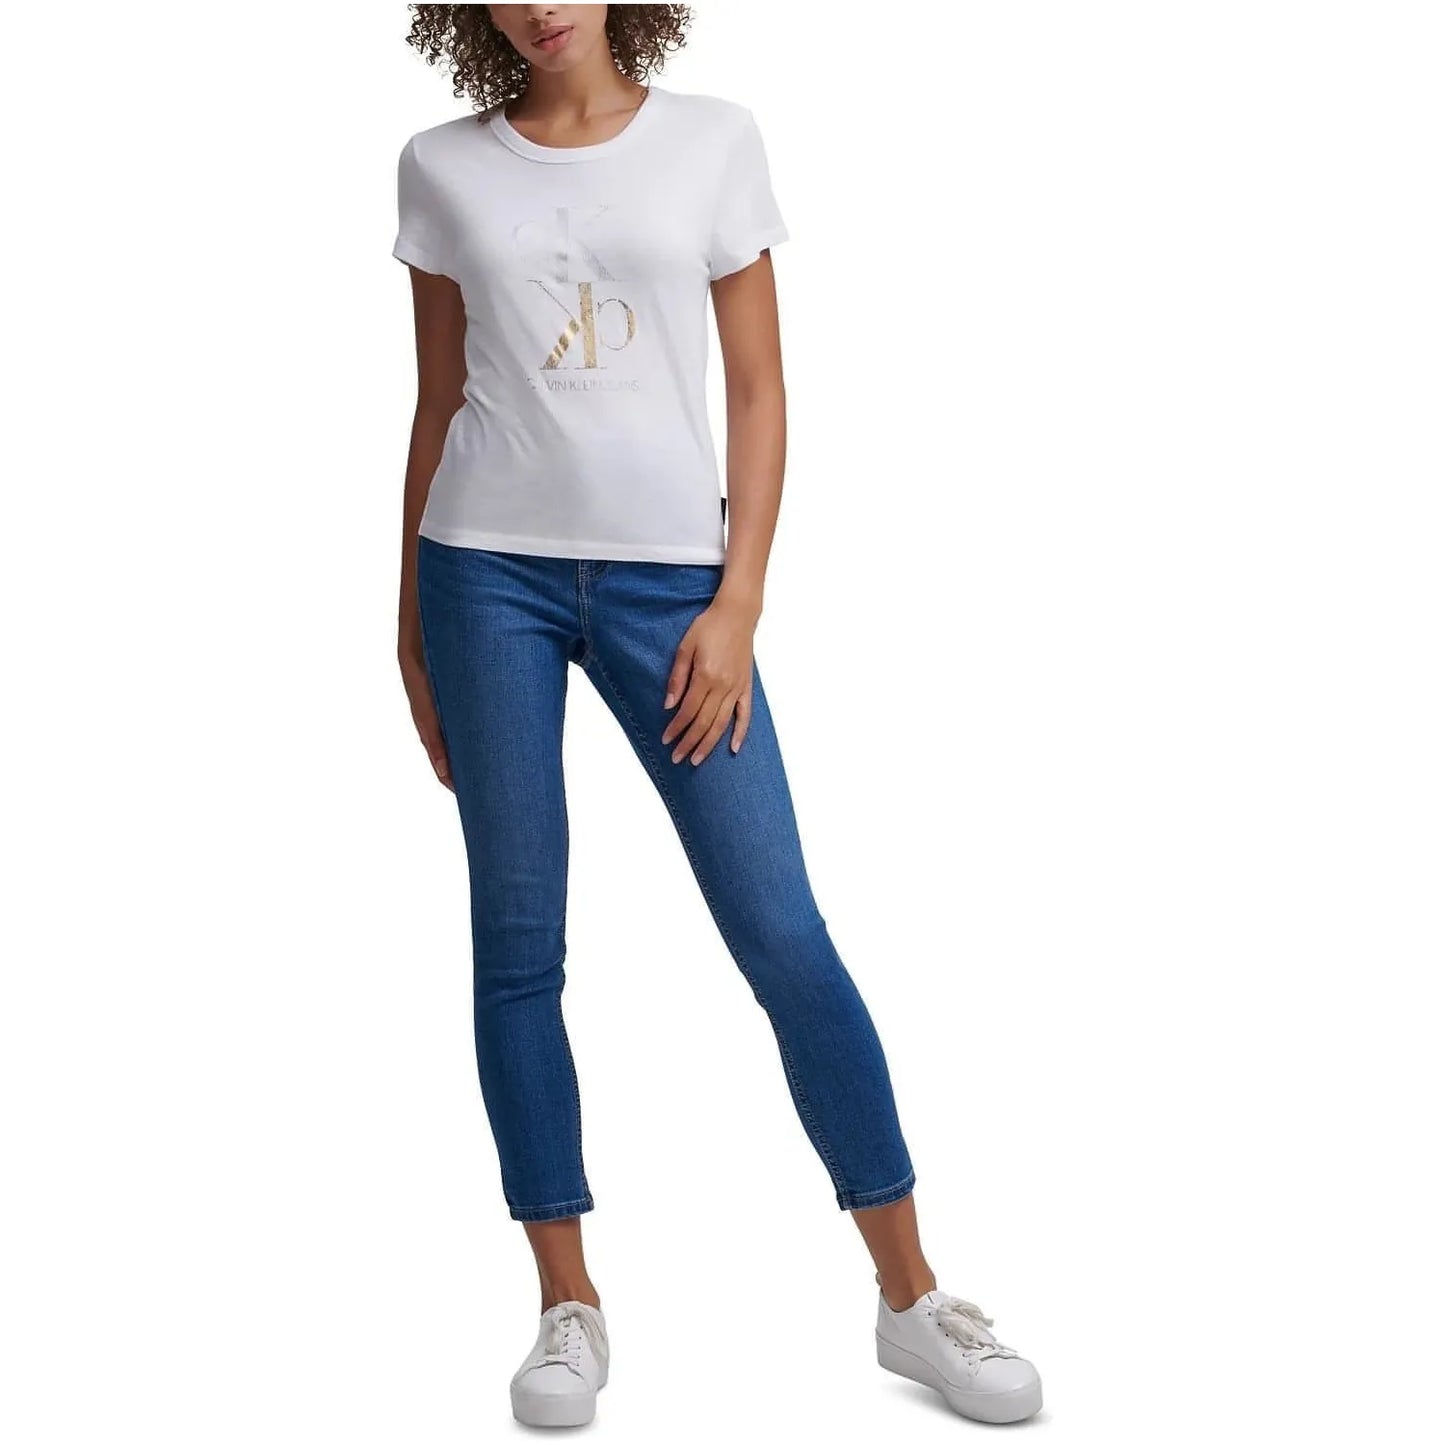 Calvin Klein-Calvin Klein Jeans Foil Logo Crewneck T-Shirt - White (Size Large) - Brandat Outlet